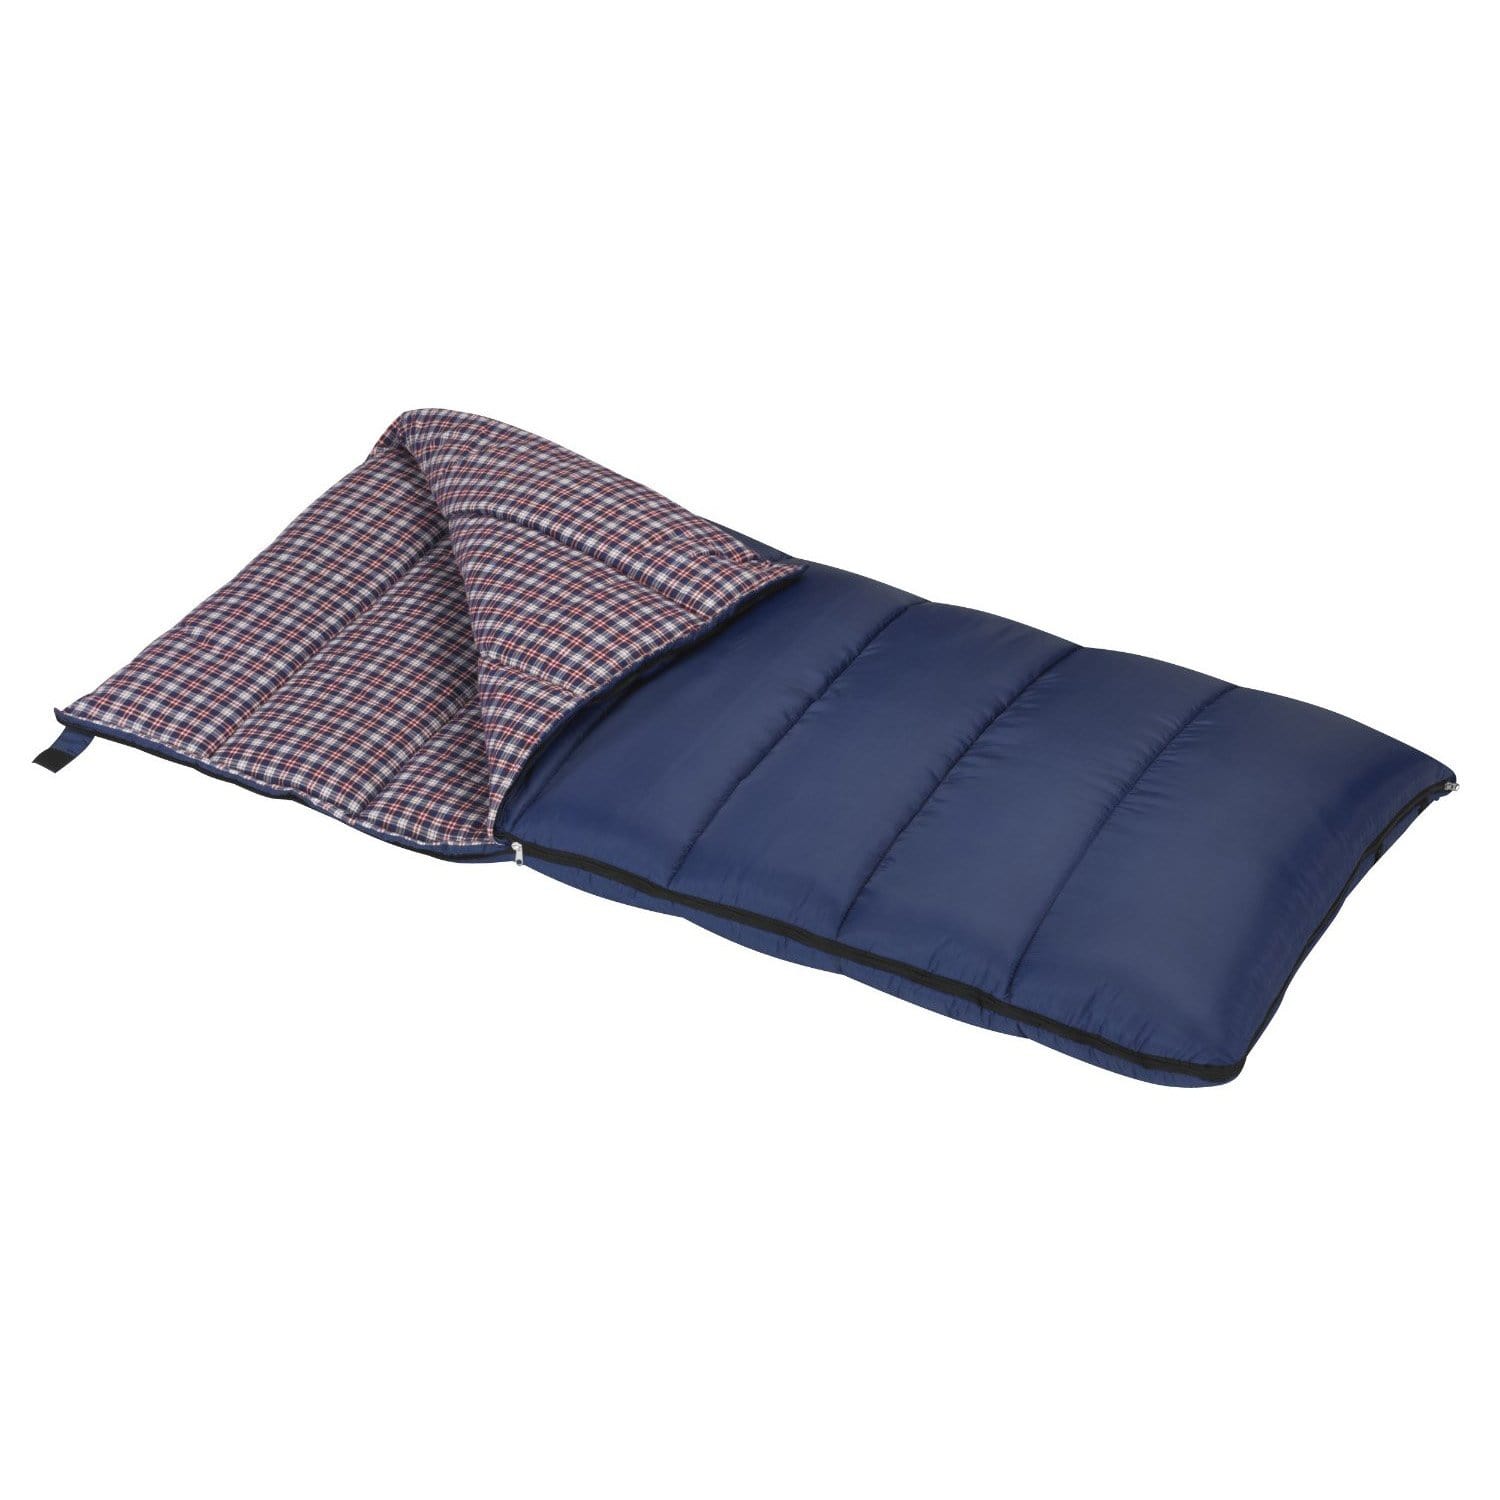 Wenzel Camping & Outdoor : Sleeping Bags & Cots Wenzel Blue Jay Sleeping Bag Stuff Sack